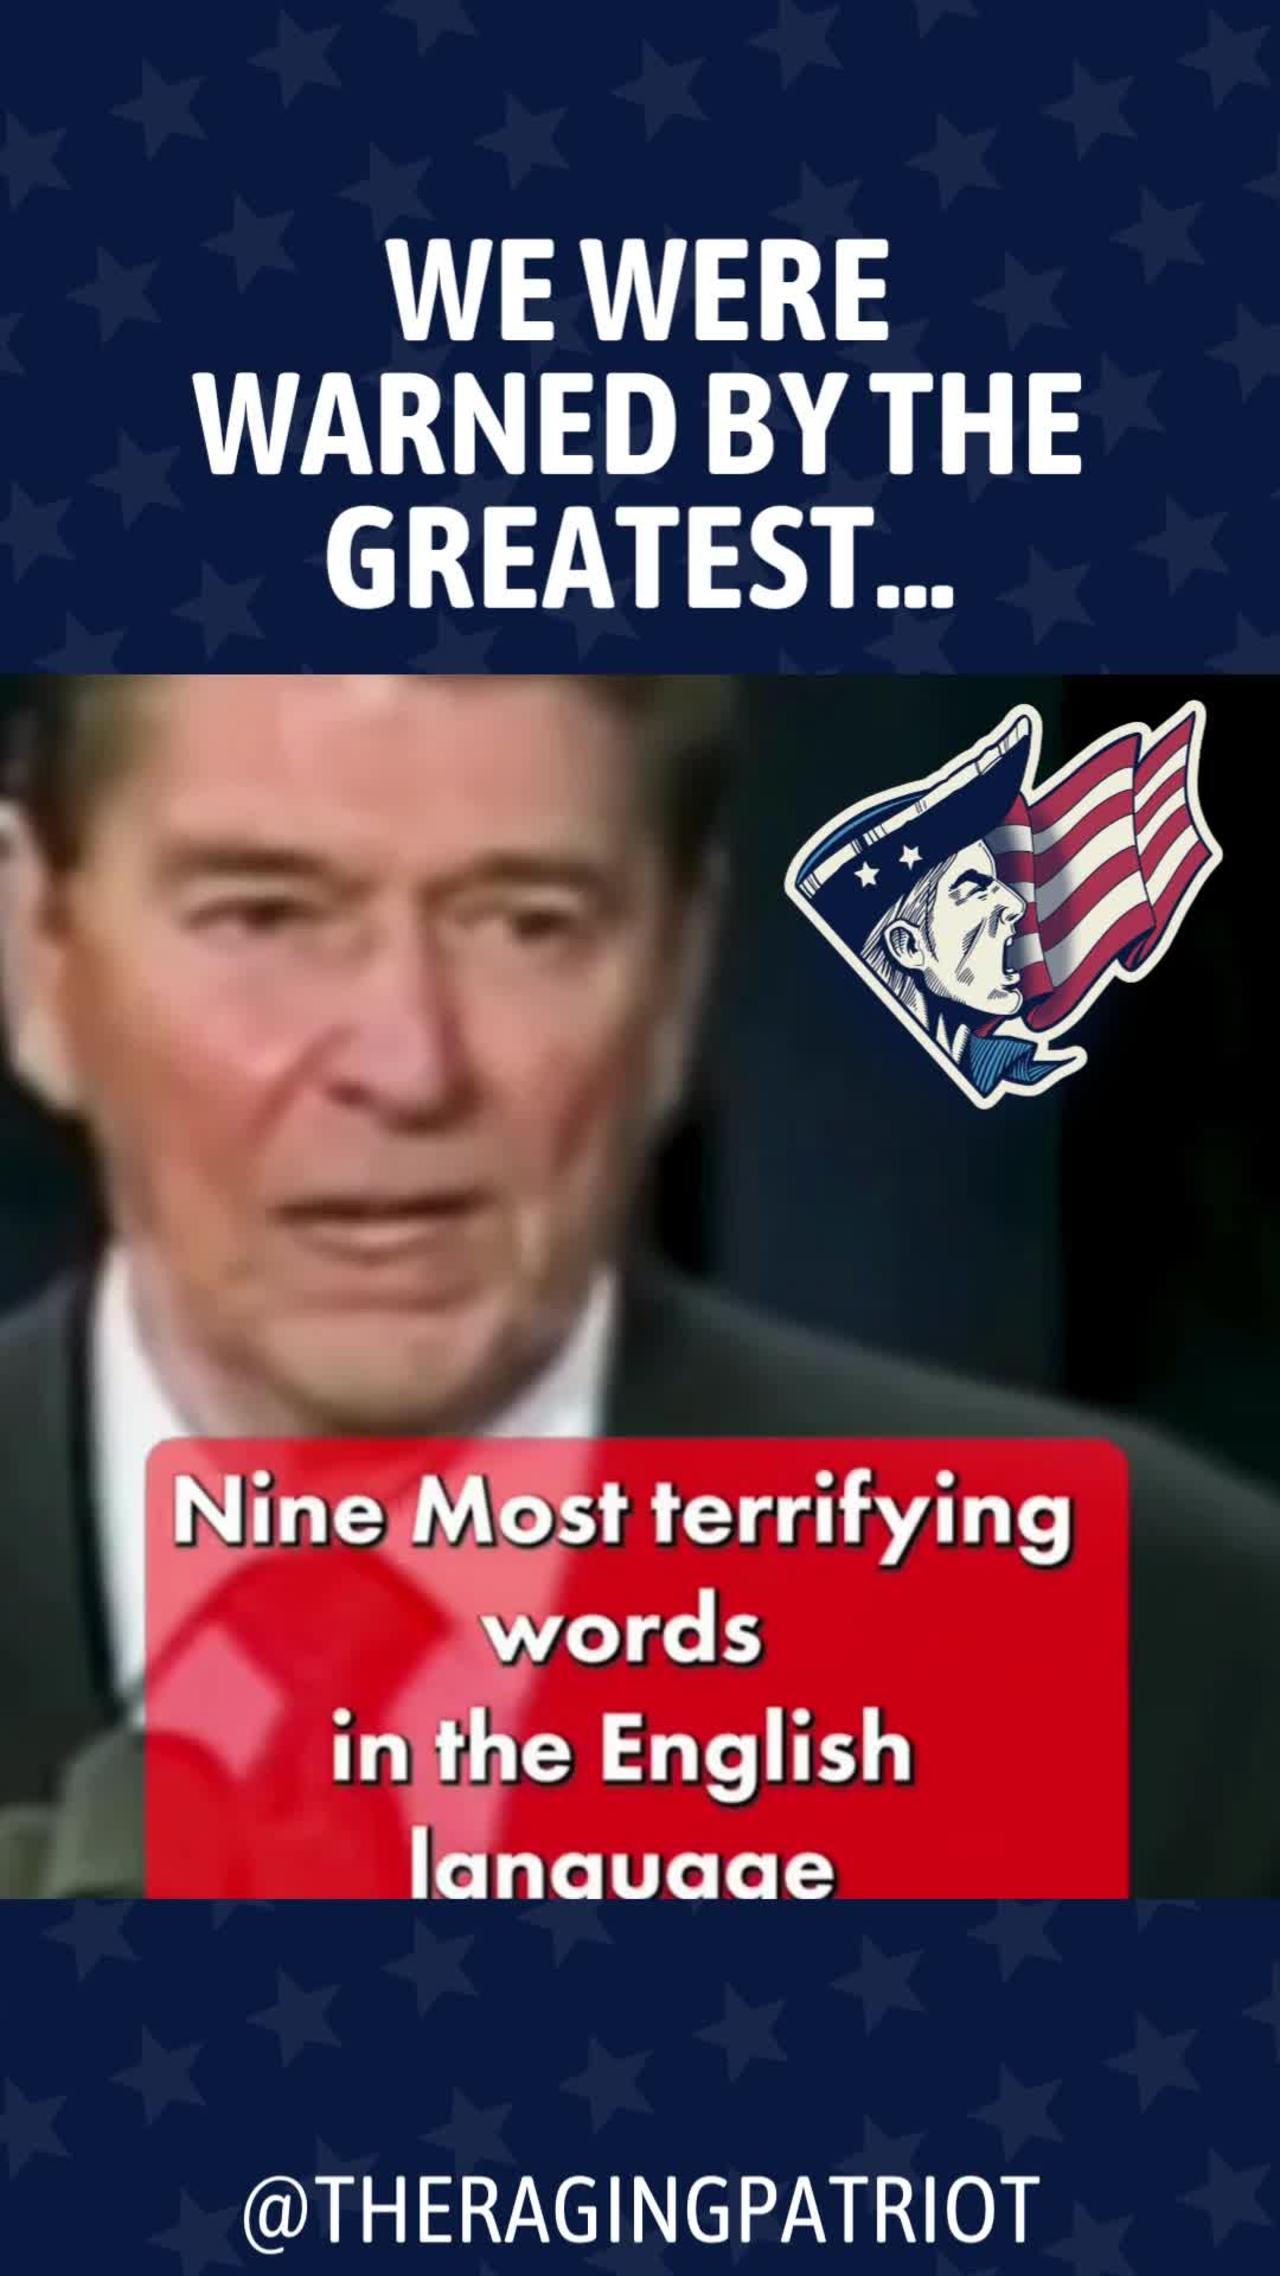 Ronald Reagan Warned Us!!!